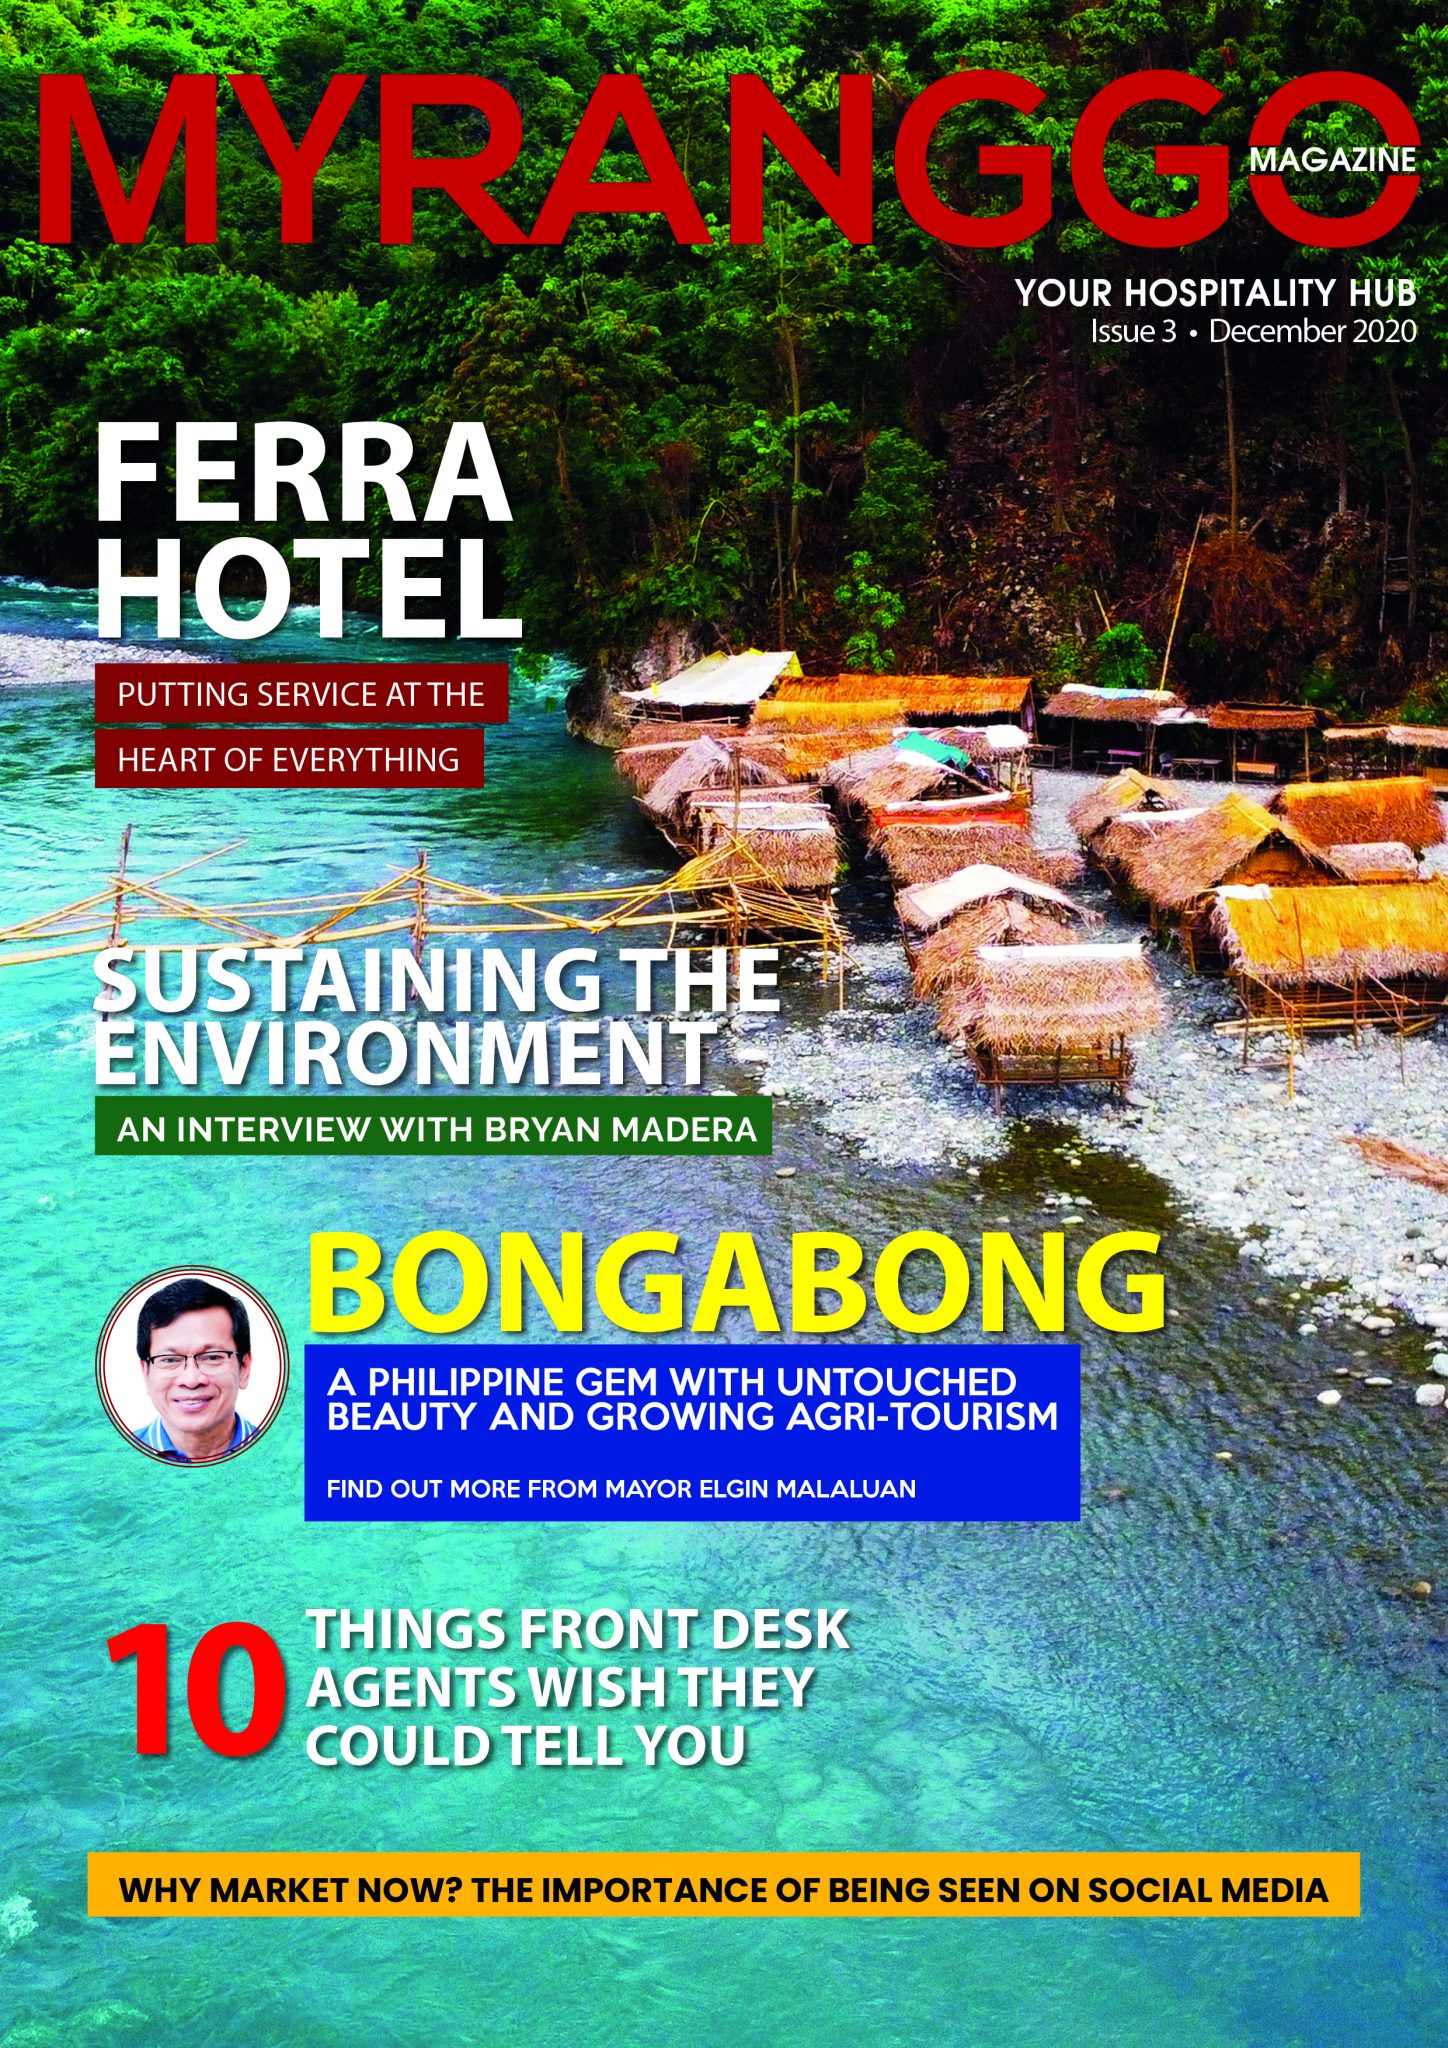 Magazine cover featuring Bongabong coastline in the Philippines My Ranggo Magazine